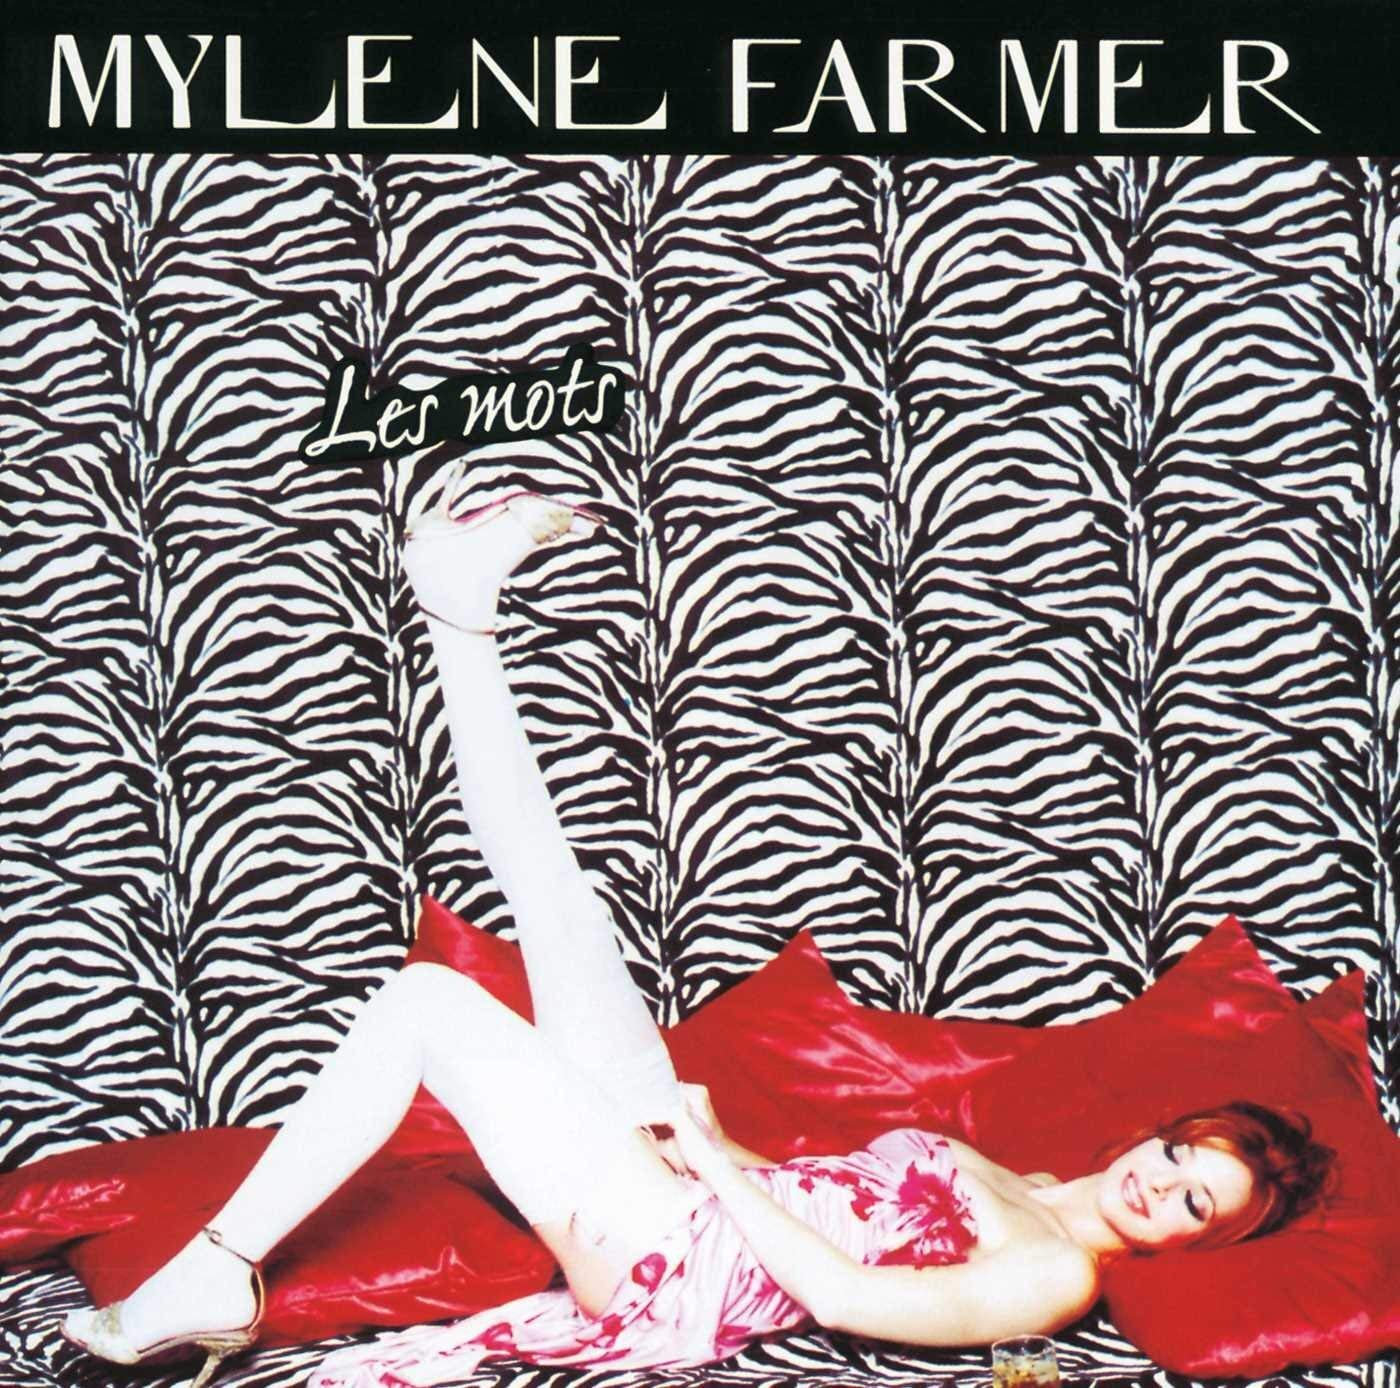 Mylène Farmer - Pochette album Les mots